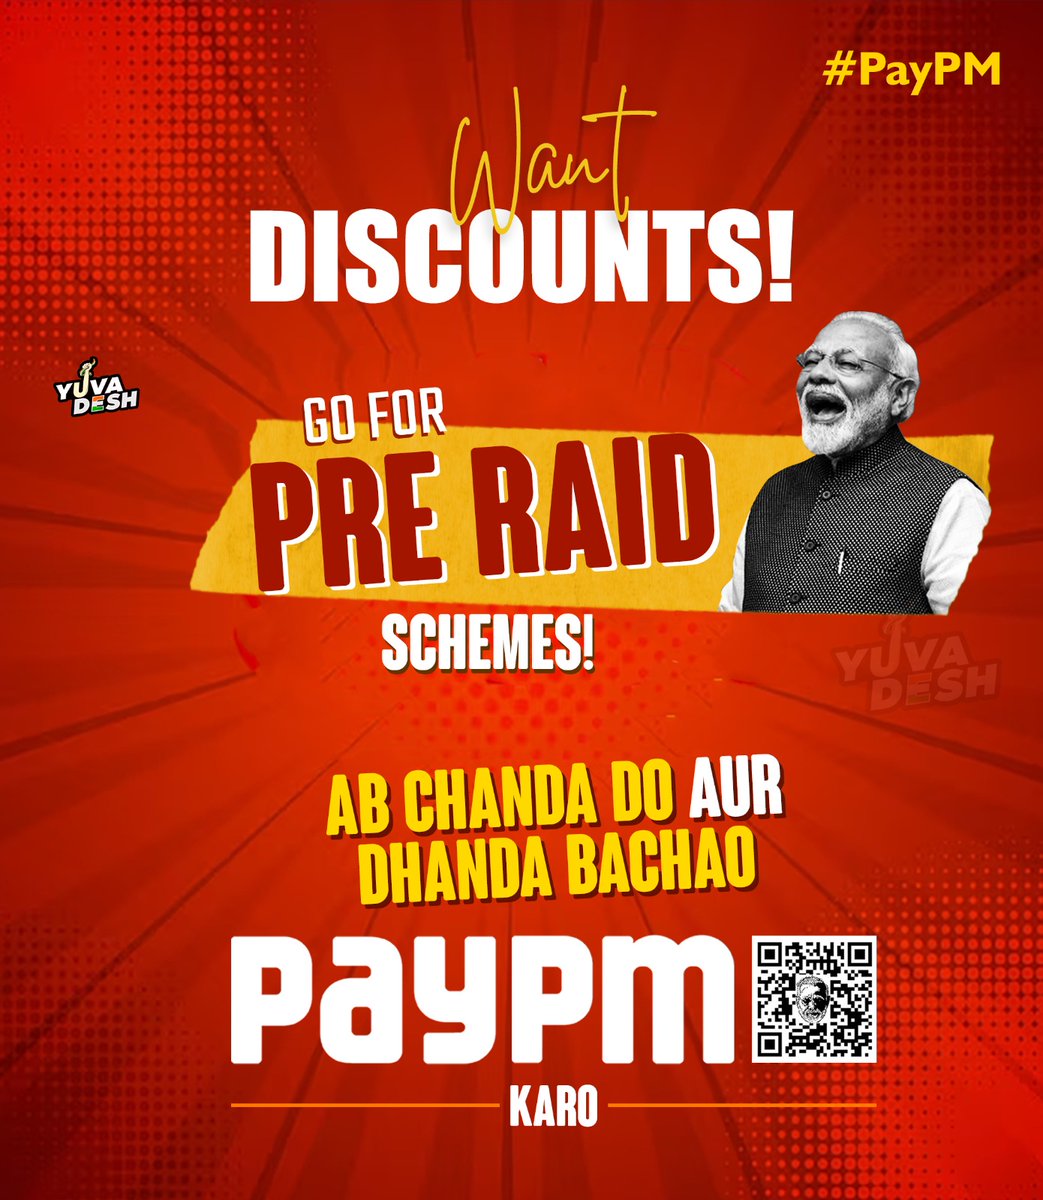 Special Discounts on 
'PRE-RAID' schemes! 

#PayPM karo!